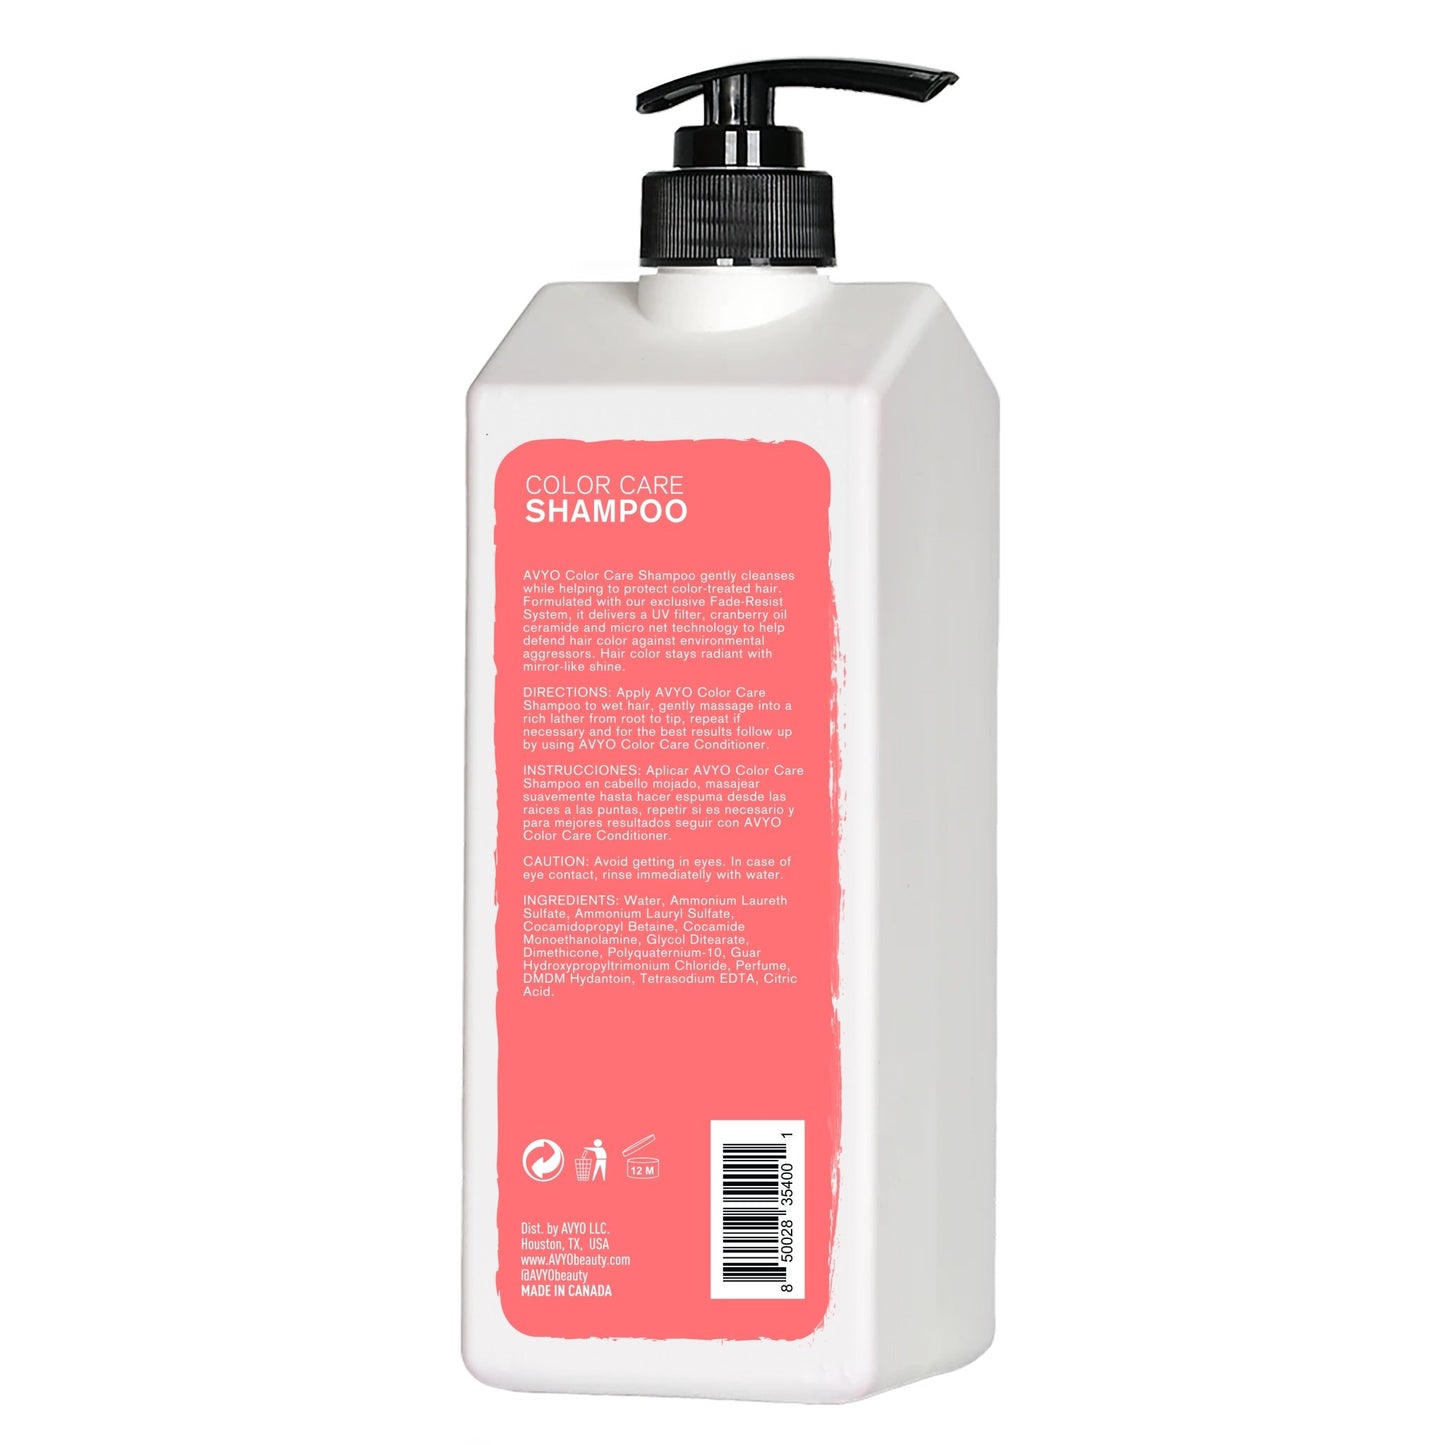 Color Care Shampoo | 16.9 fl. oz. | AVYO - SH Salons